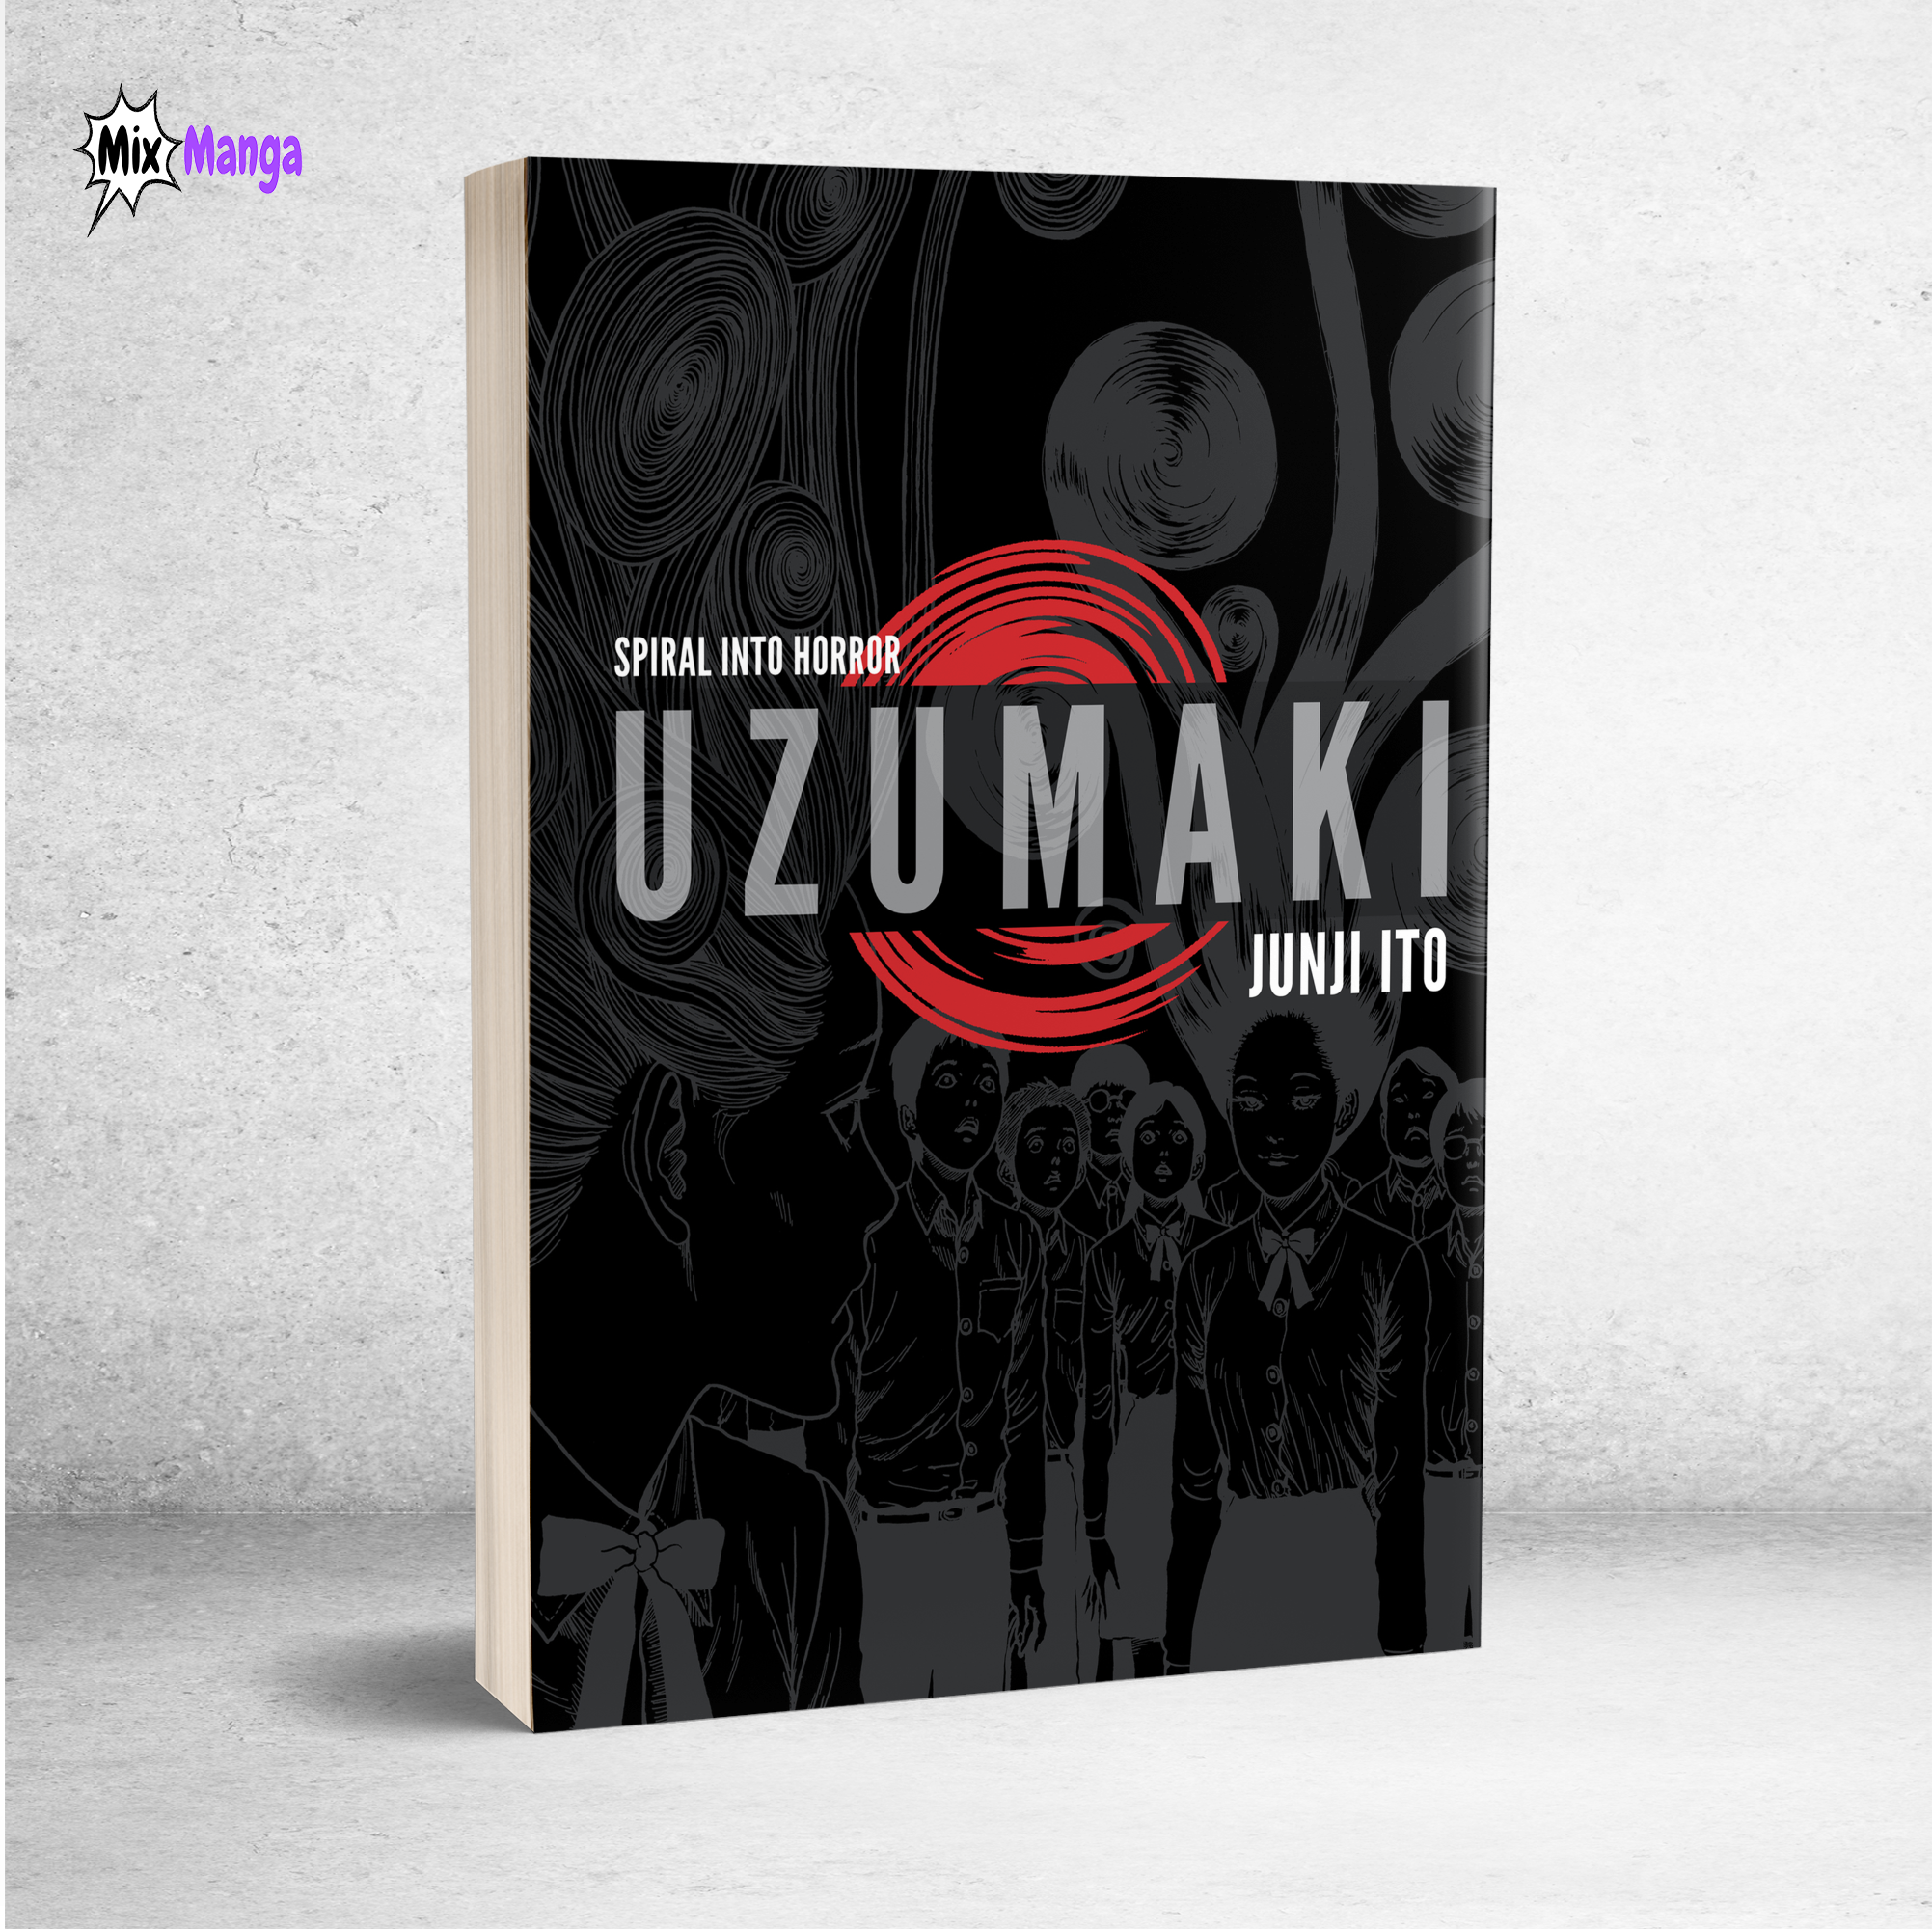 Review manga Junji Ito collection: Uzumaki (Spiral), by luvya